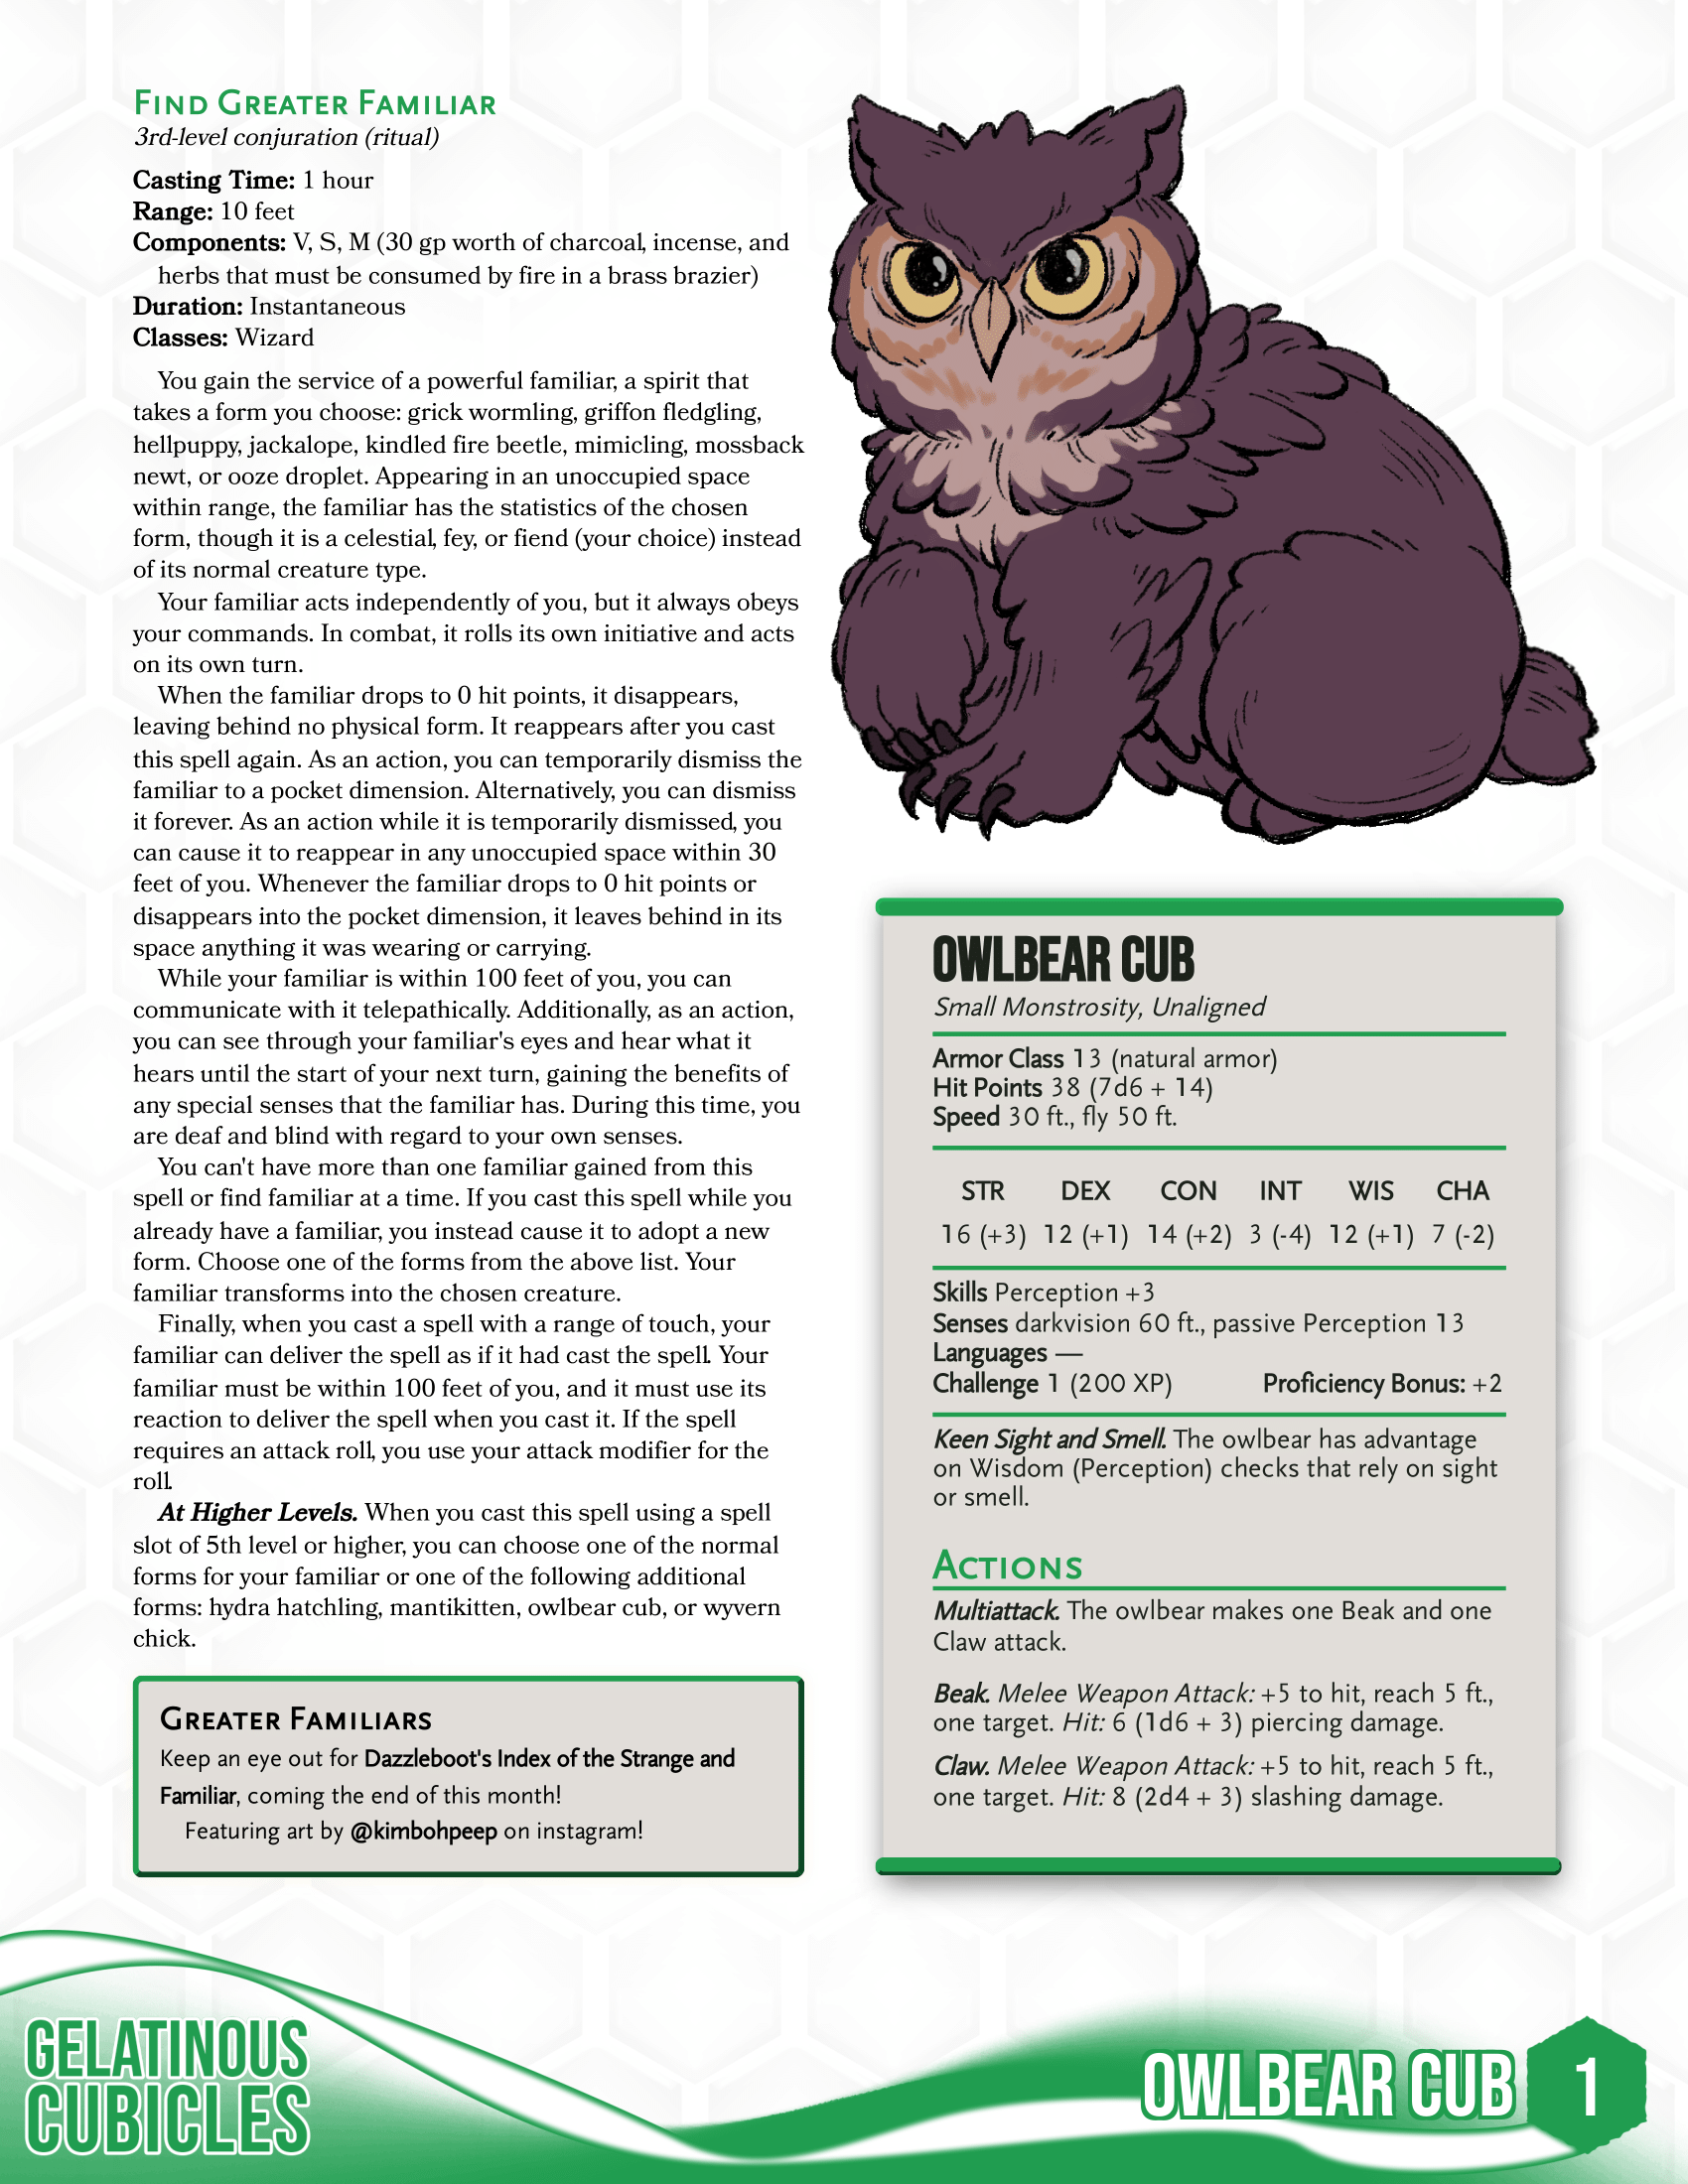 Owlbear Cub (Gelatinous Cubicles)-1.png